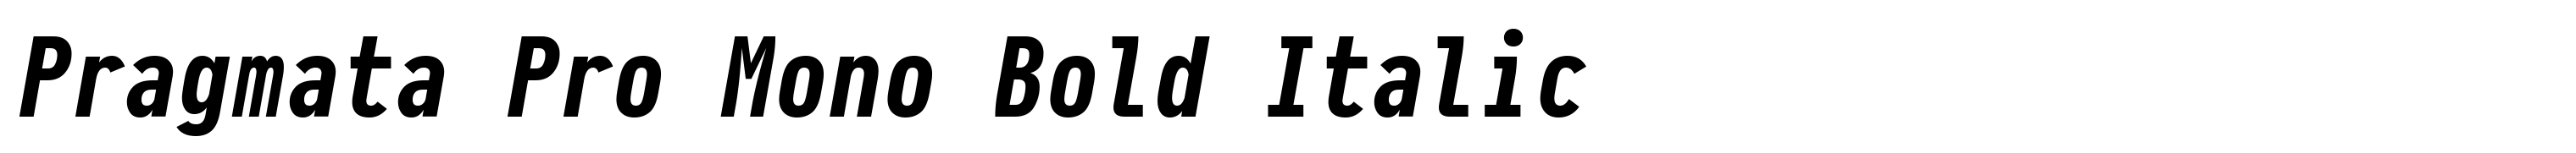 Pragmata Pro Mono Bold Italic